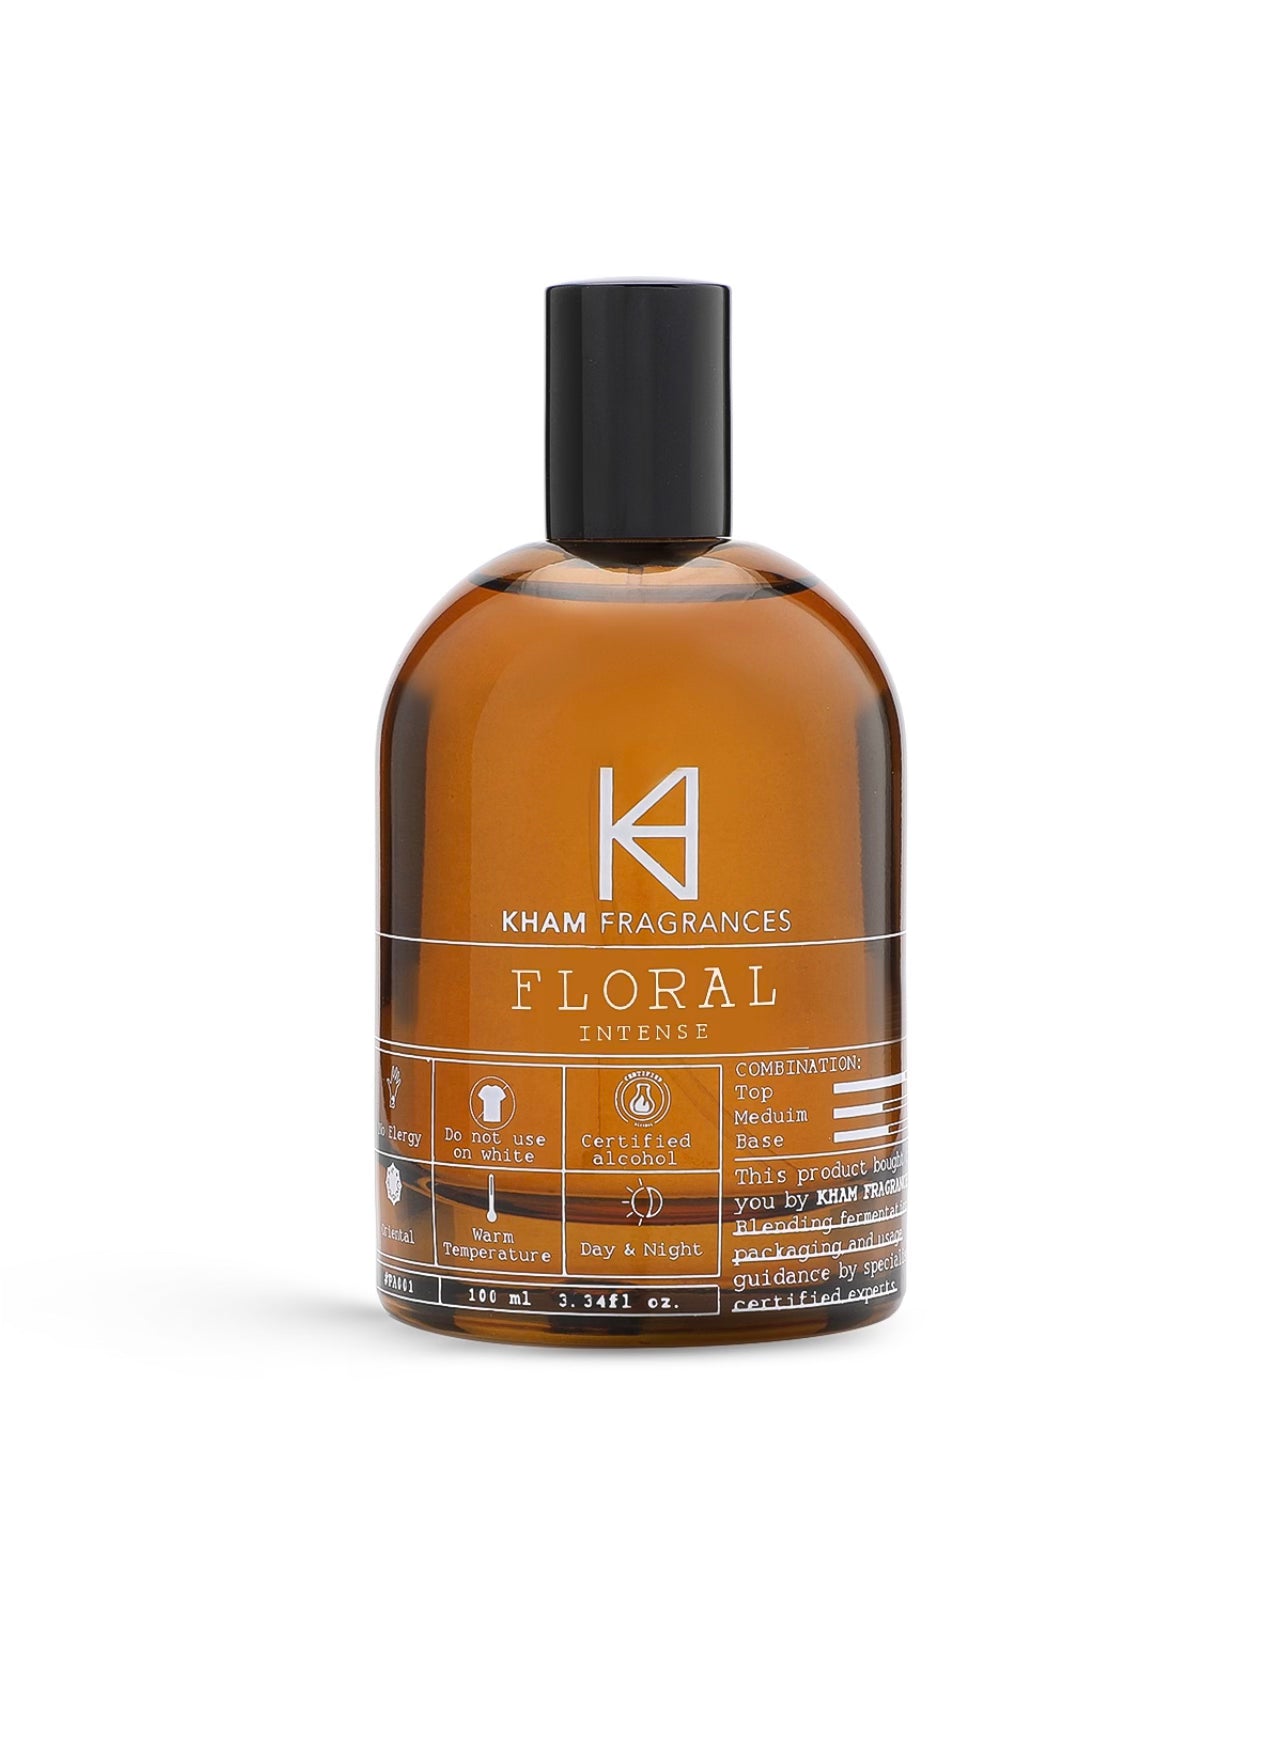 Kham Floral Intense Perfume - 100ml